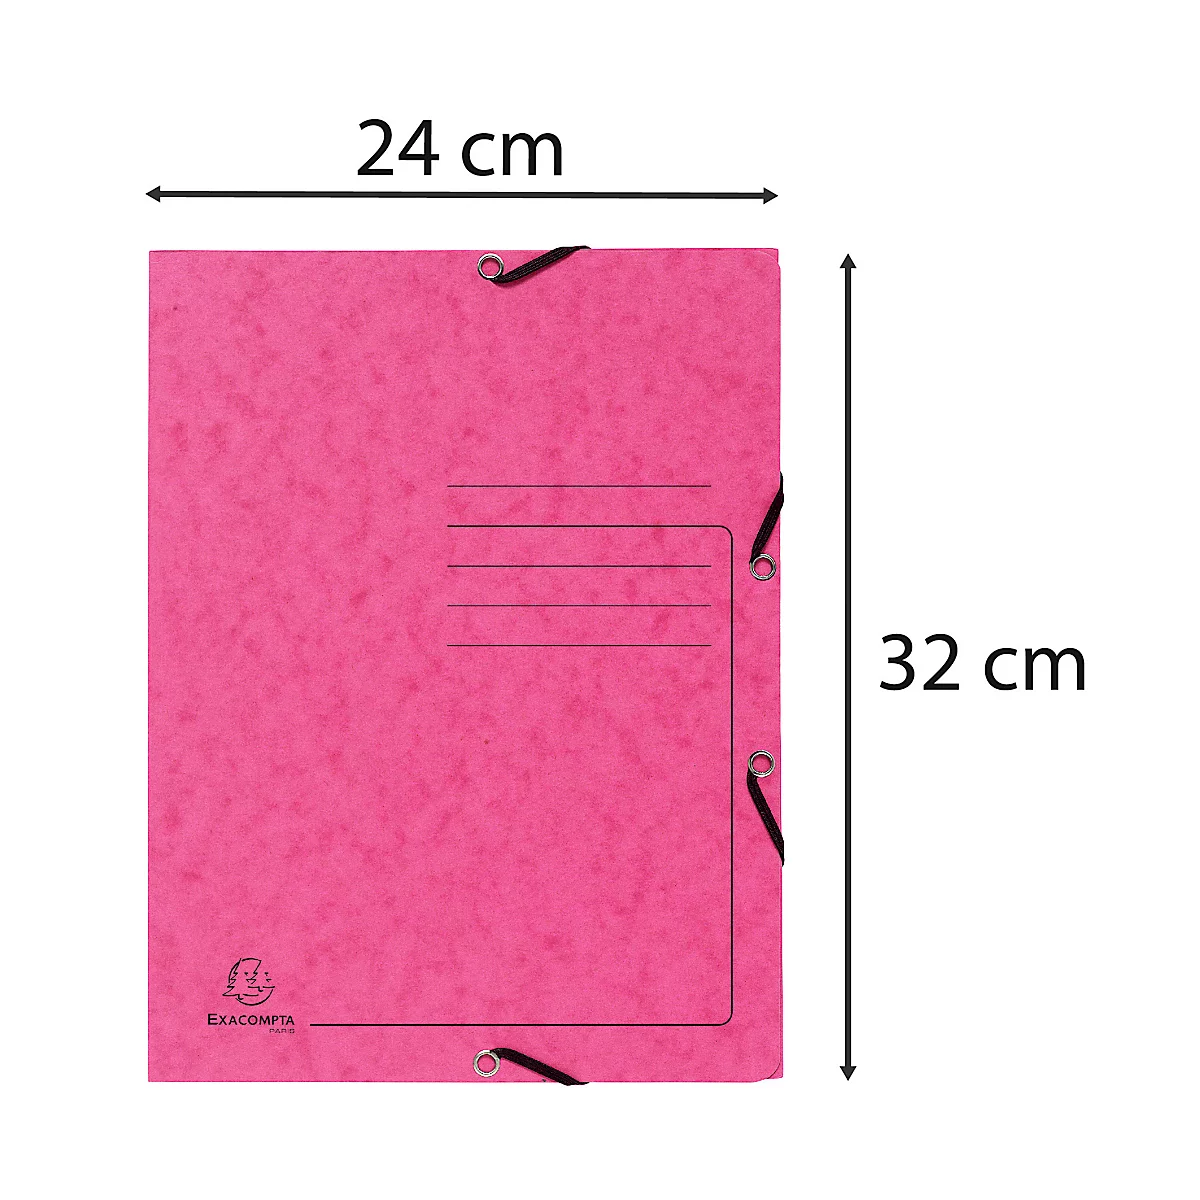 Exacompta Sammelmappe, DIN A4, mit Gummizug, 3 Klappen, beschriftbar, Colorspan-Karton, 355 g/m², rosa